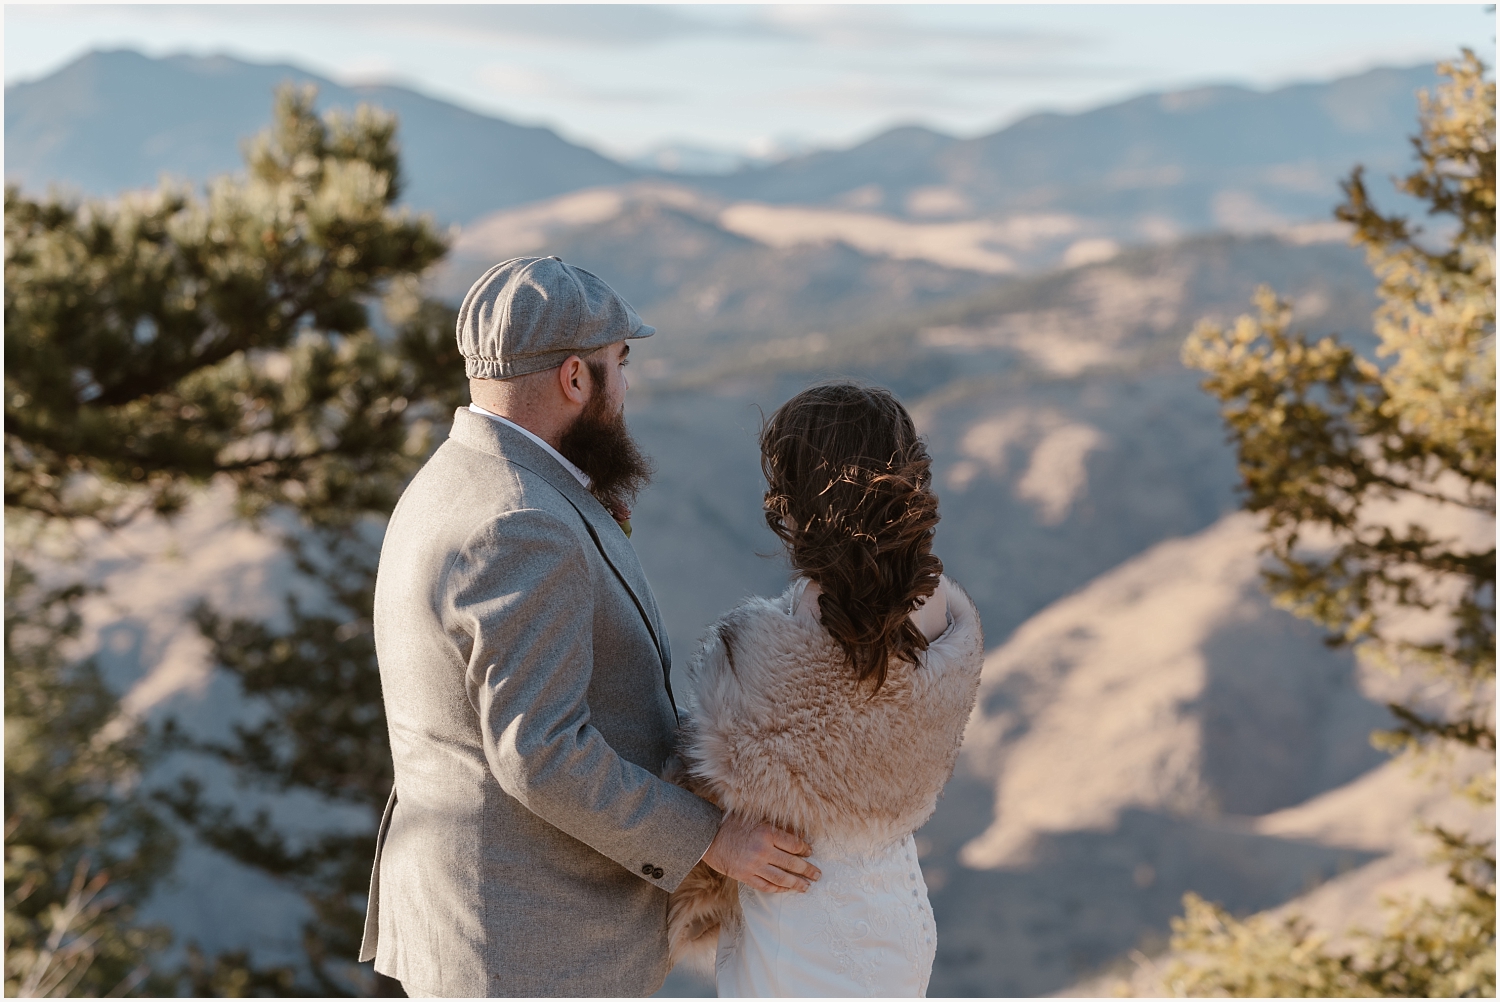 Denver Elopement Guide. Couple looks out onto Denver Mountain during elopement